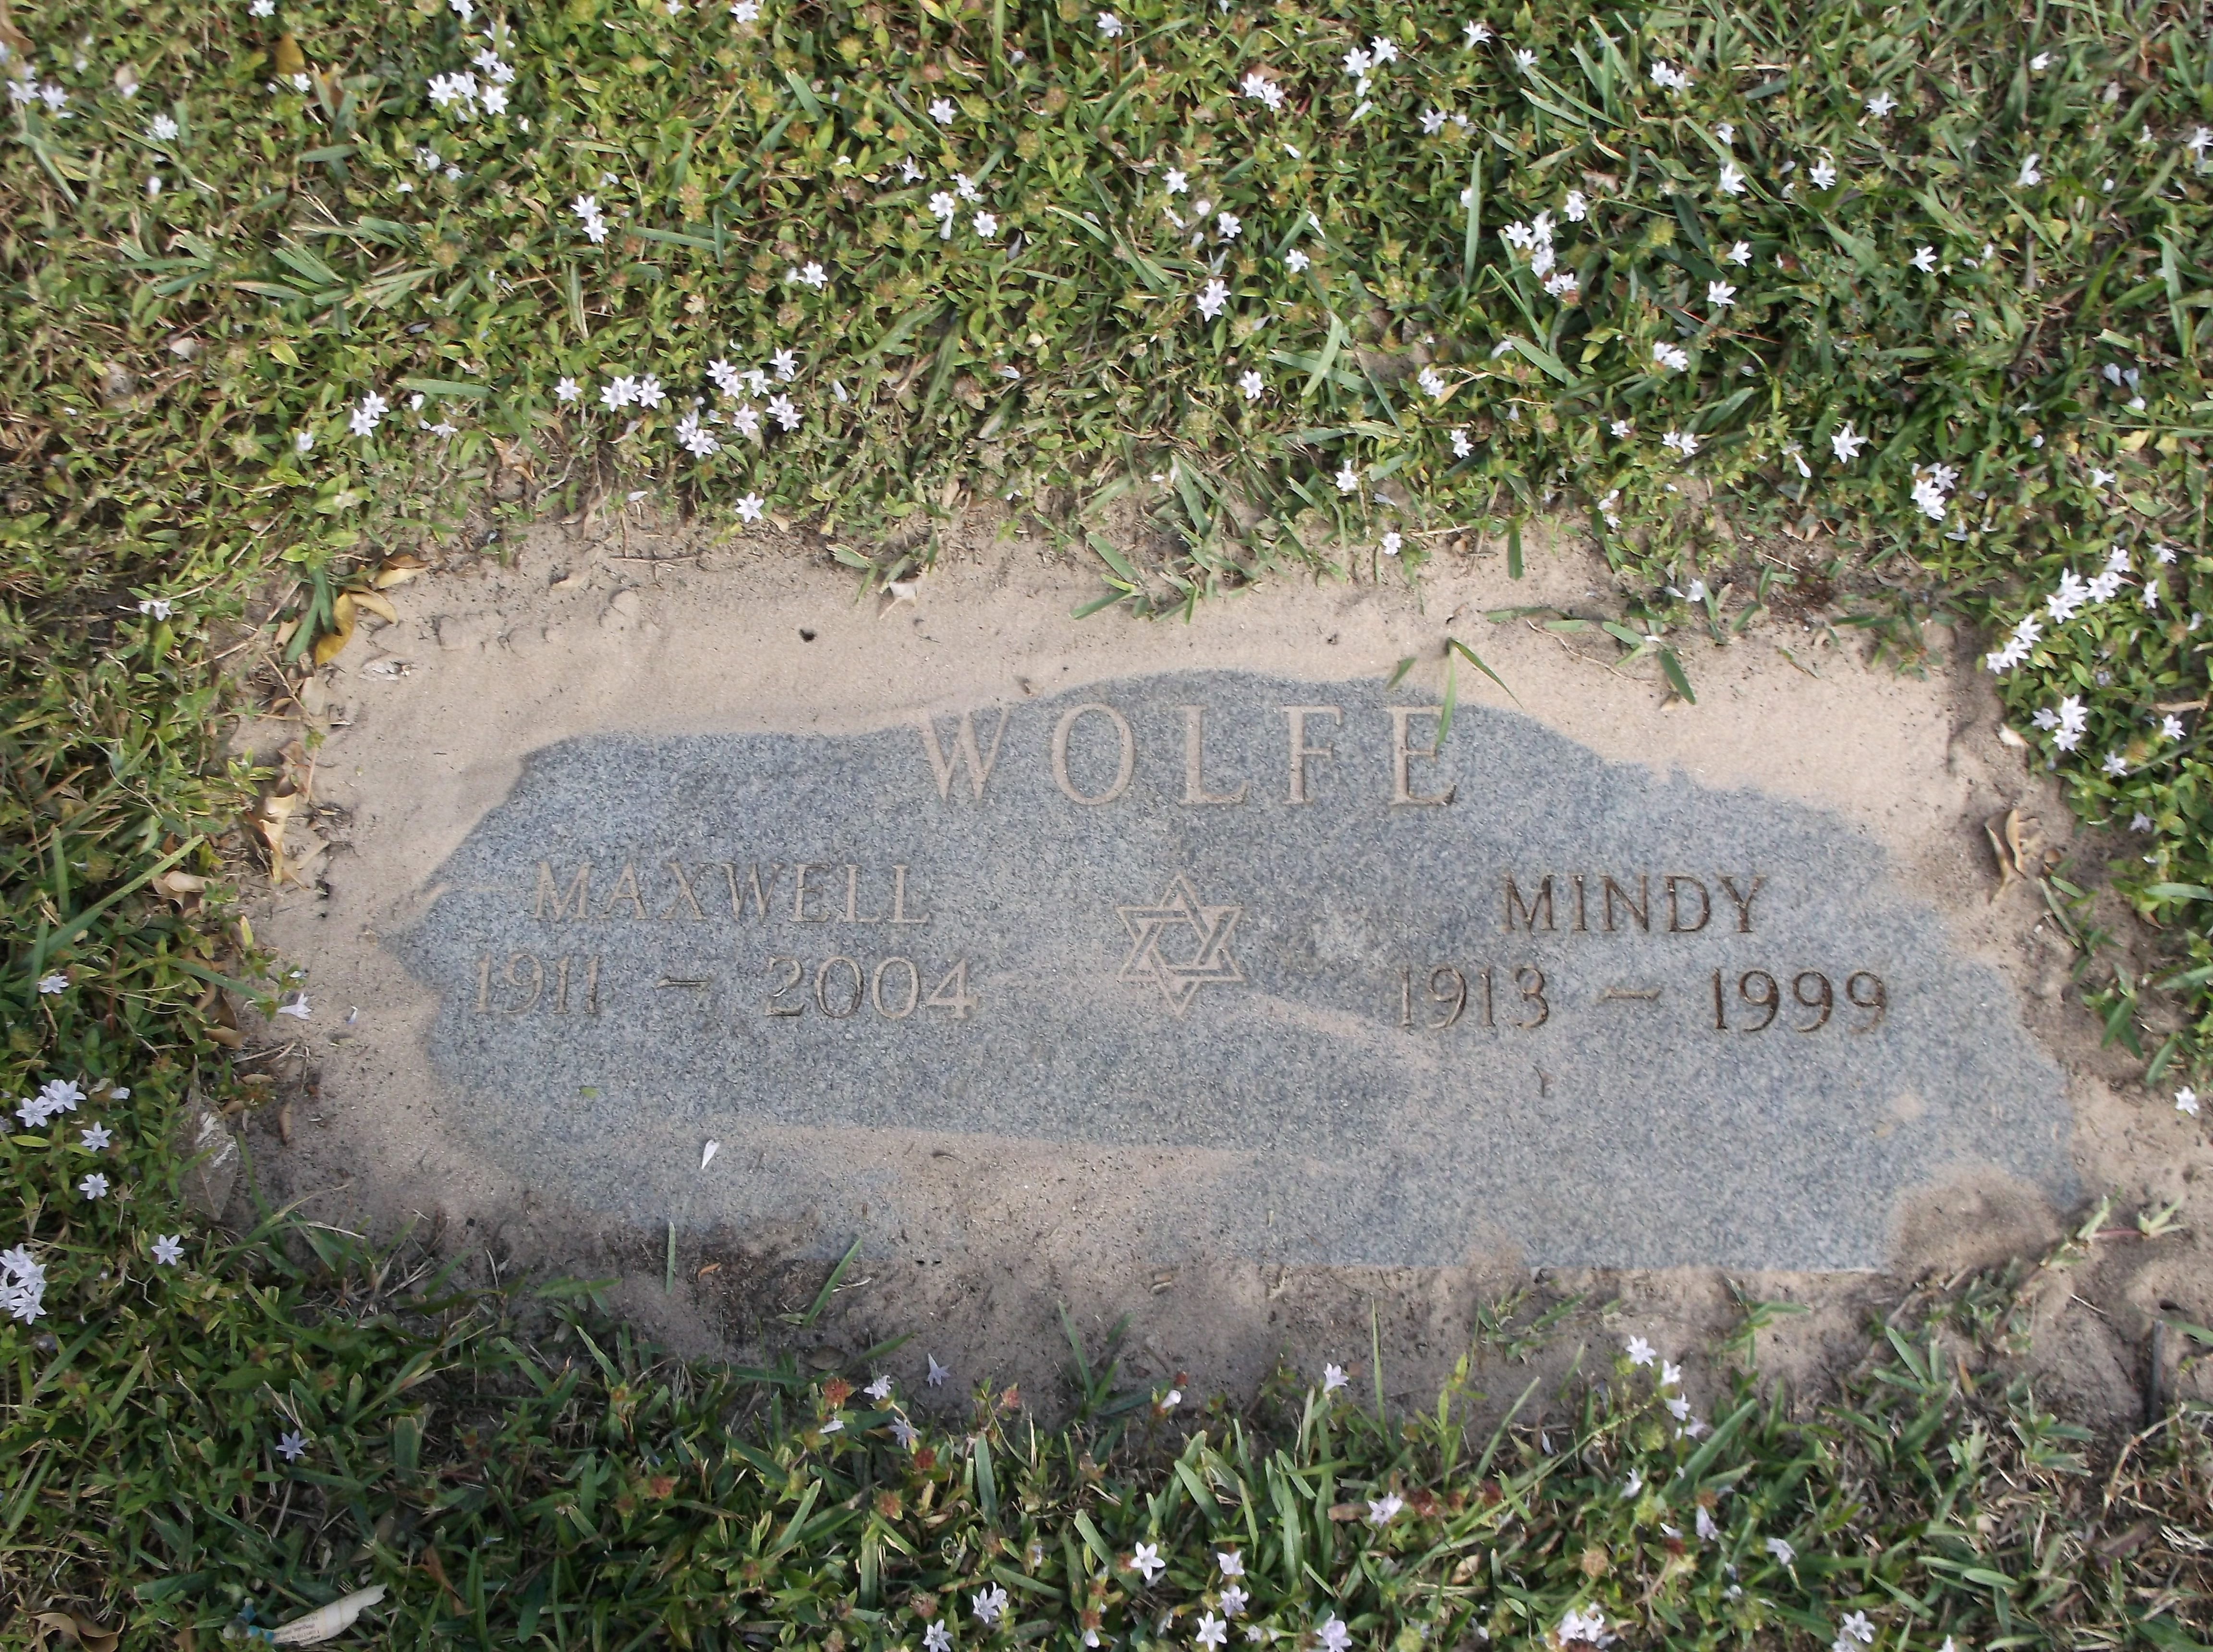 Mindy Wolfe